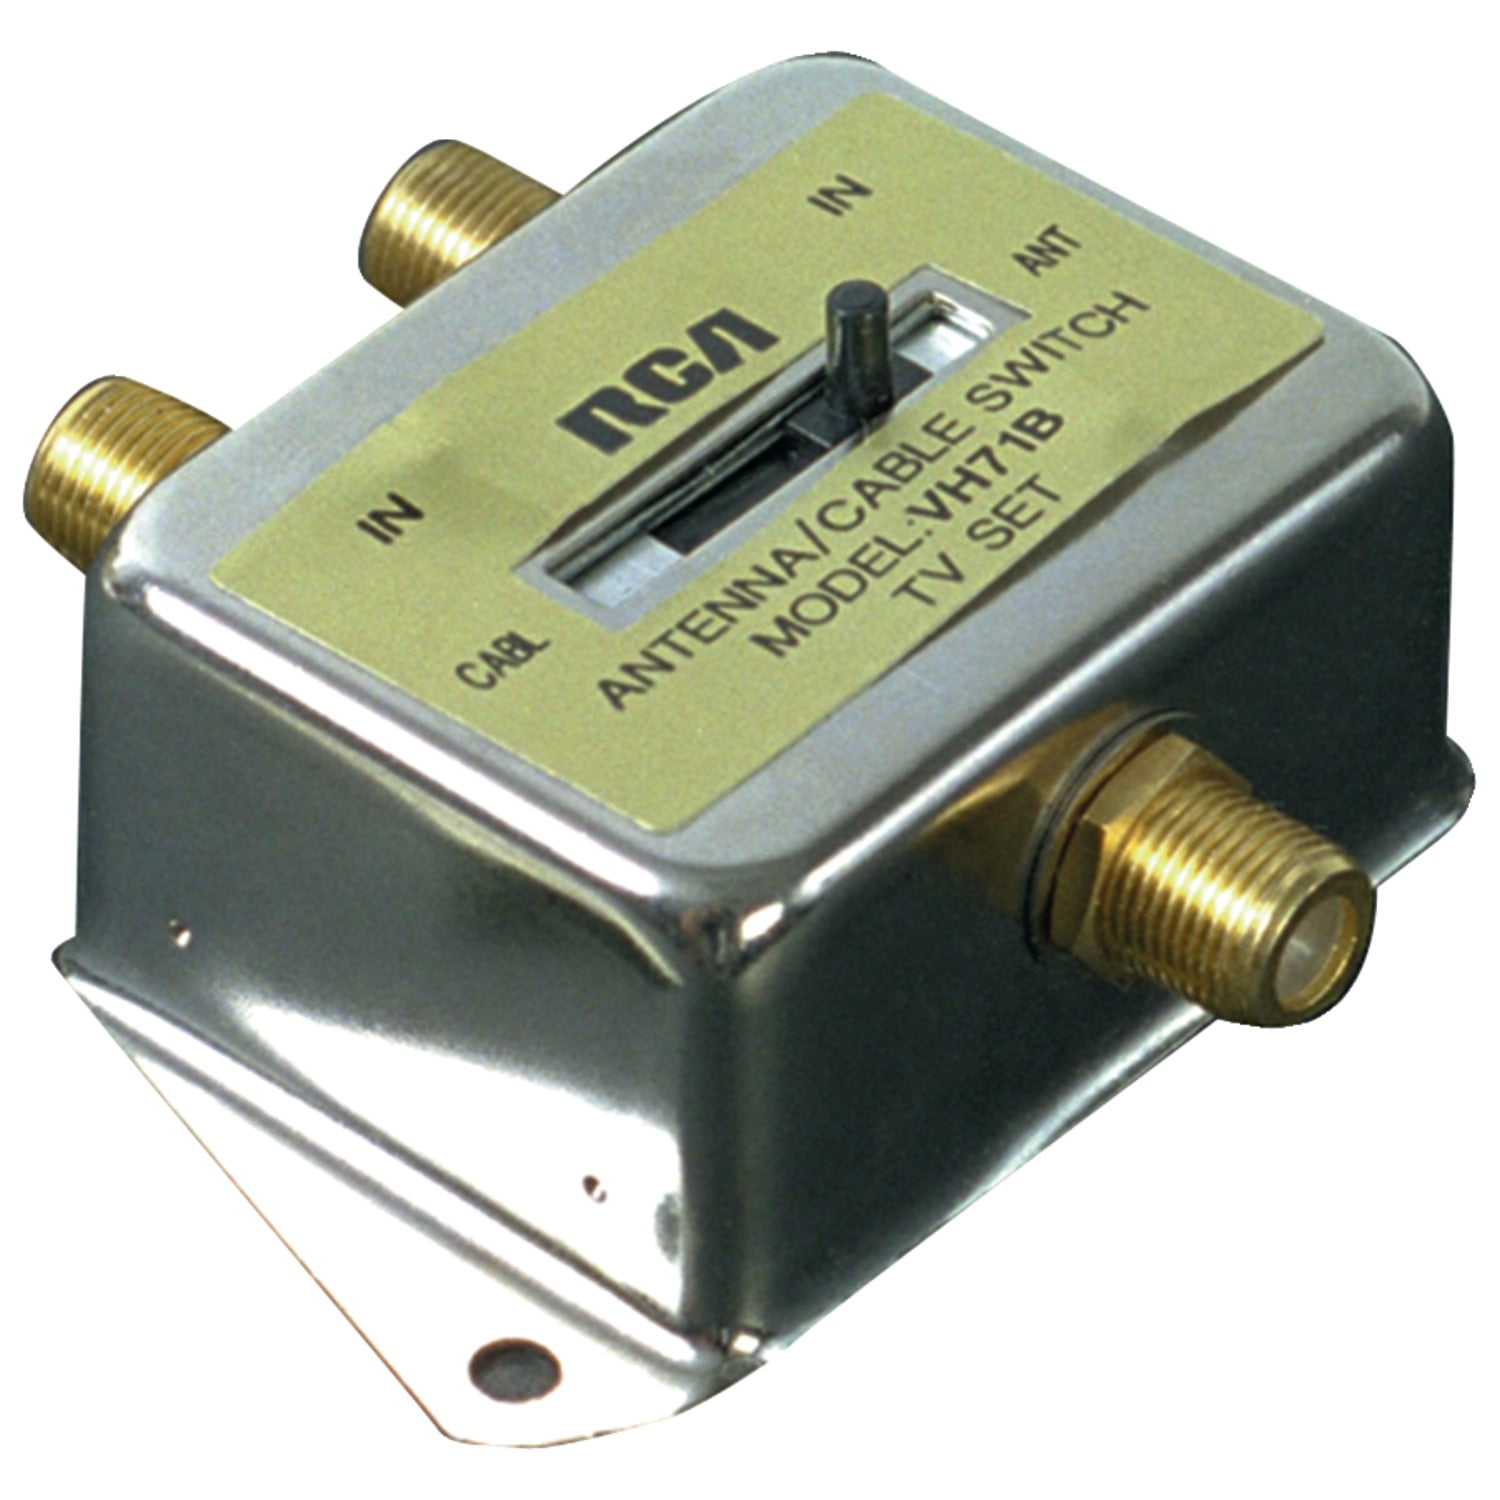 2 WAY A/B Coaxial Coax RF Switch Manual Selector Push Button Cable TV Antenna